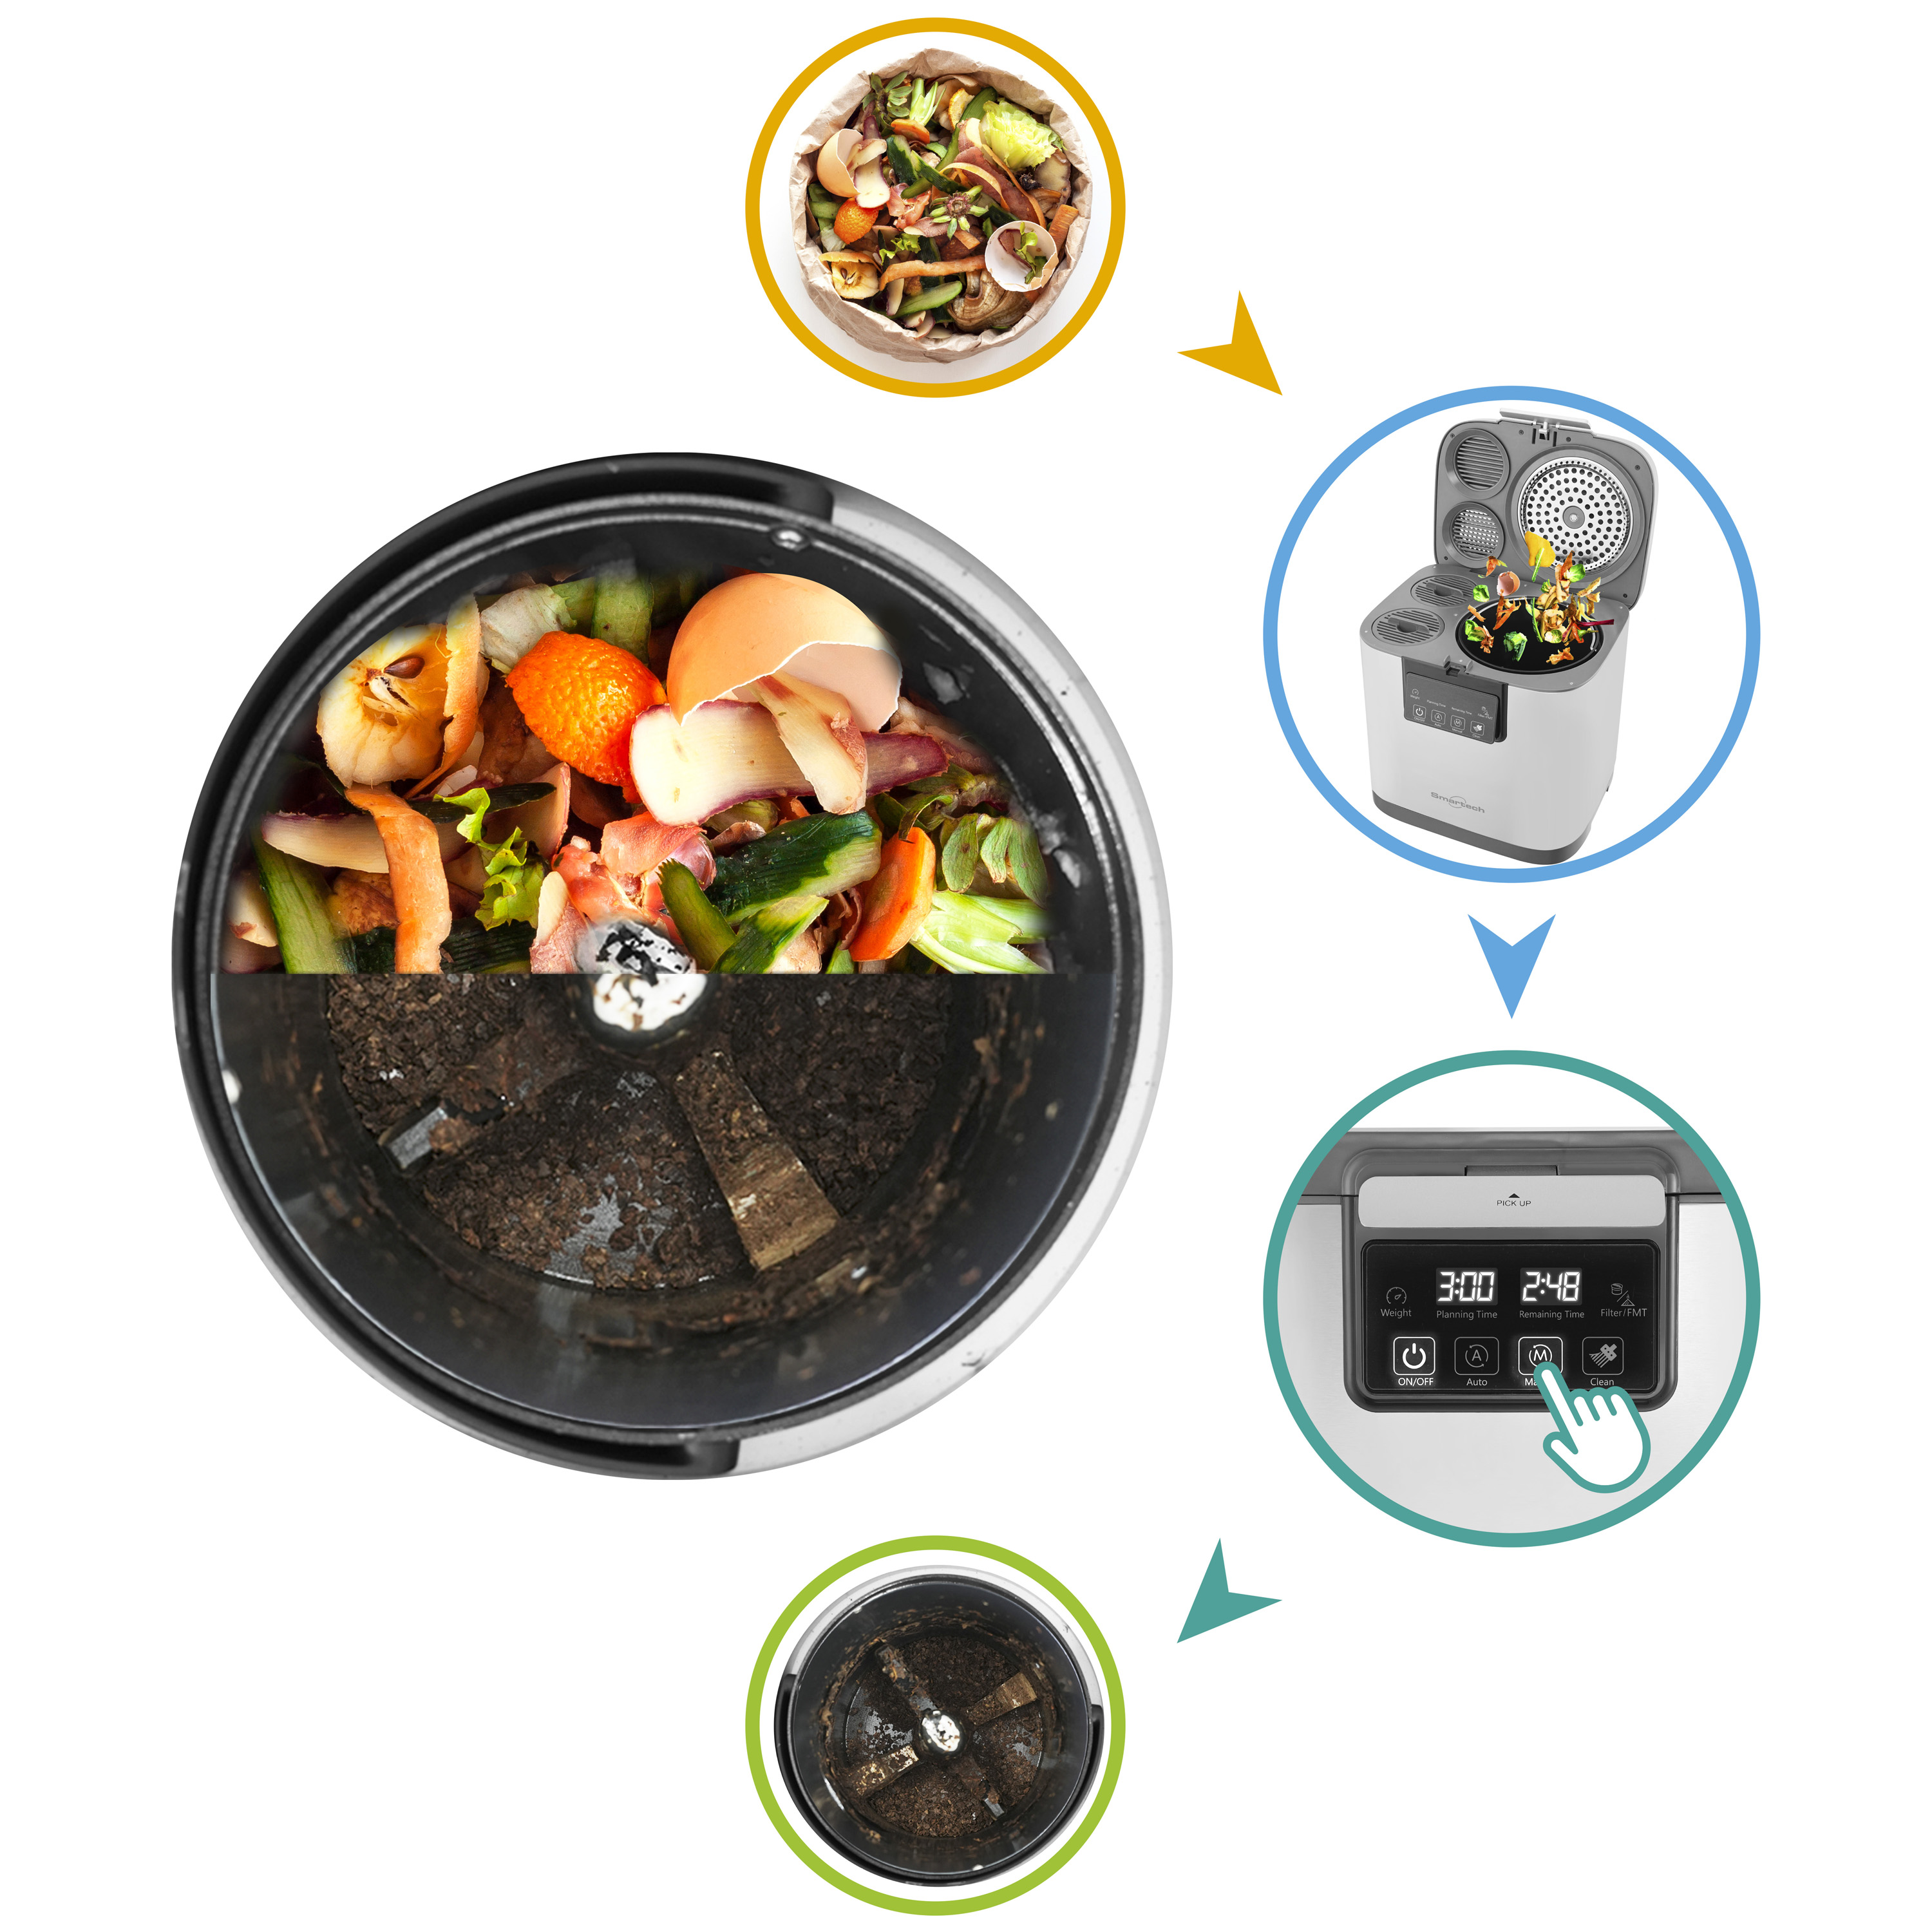 Smartech Smart Recycle Intelligent UV Food Waste Disposer SW-2001, , large image number 4